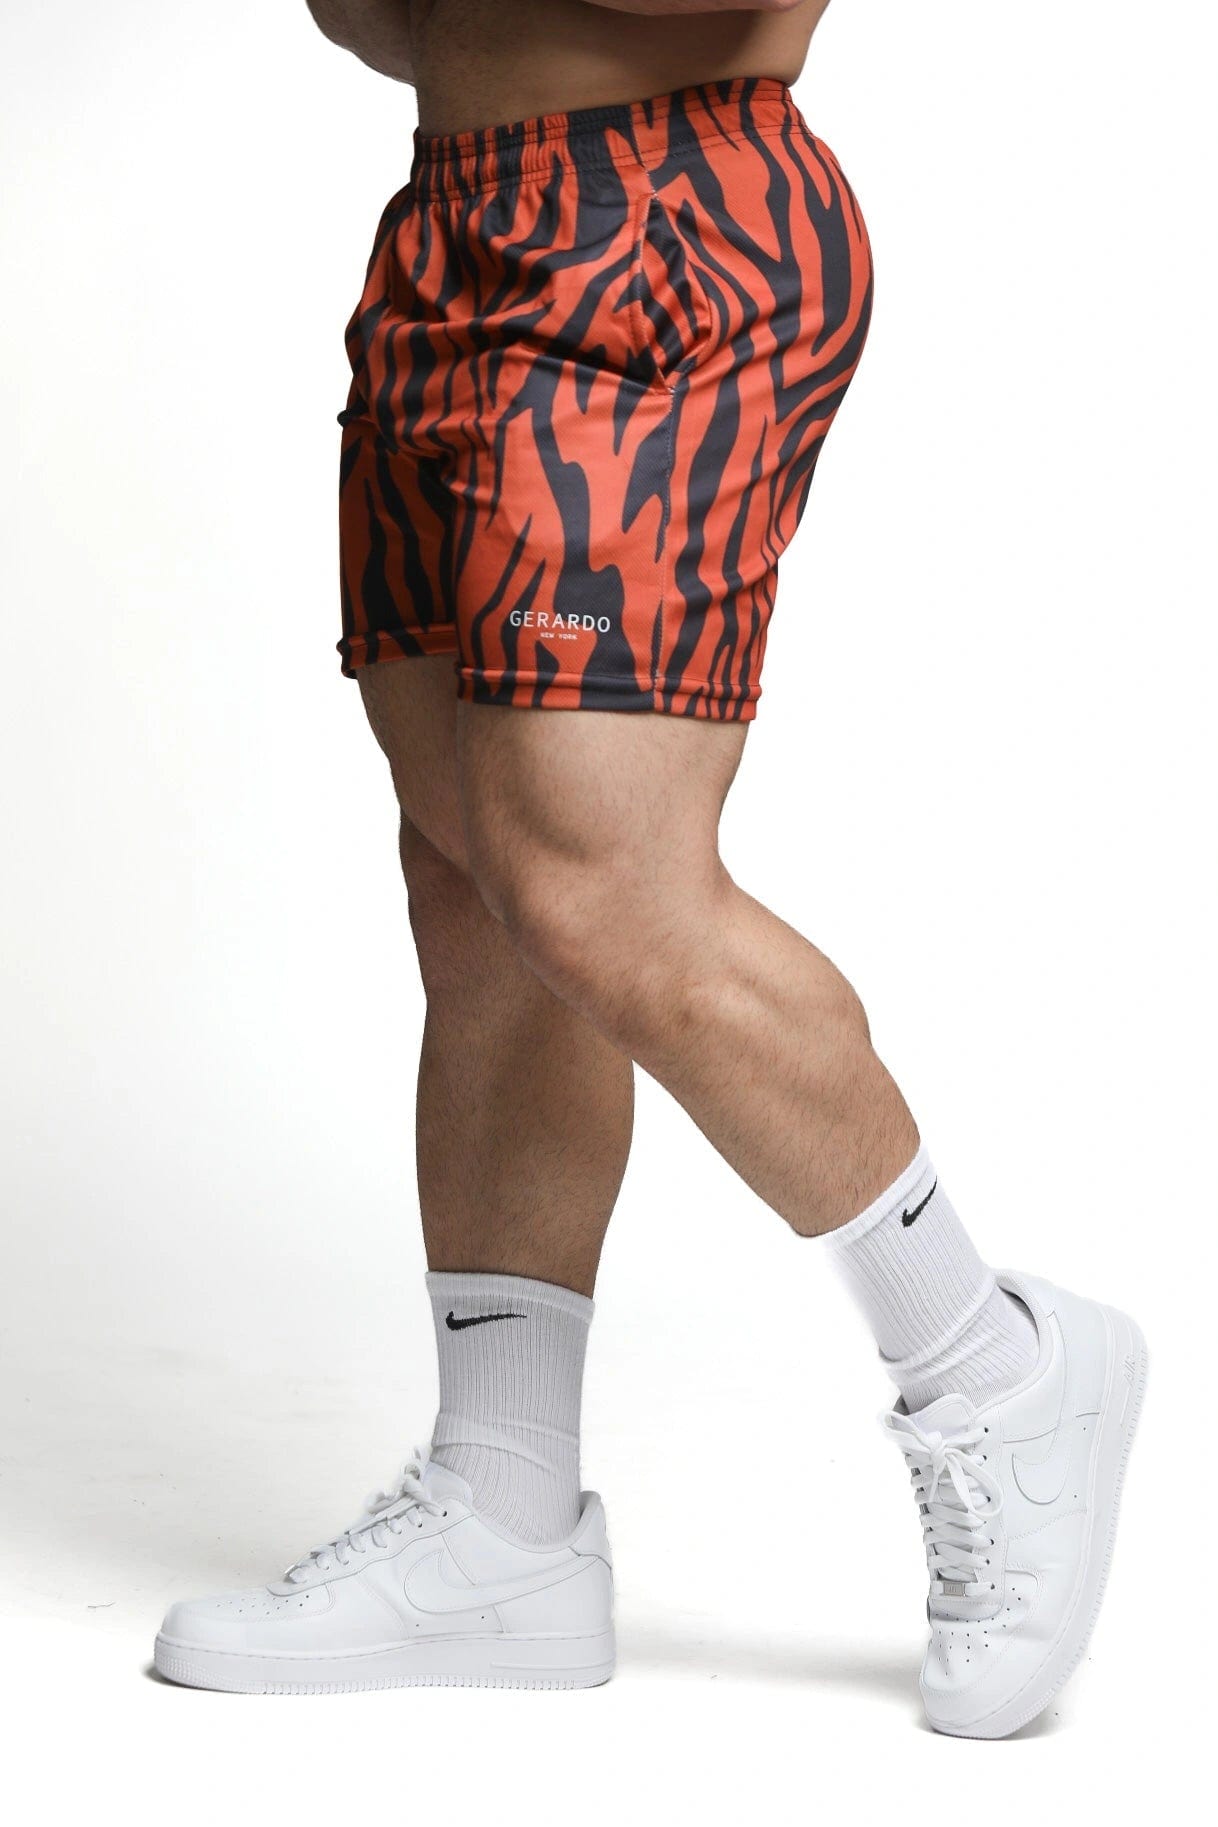 Mens Breathable Performance Shorts - Tiger Print - Gerardo Collection